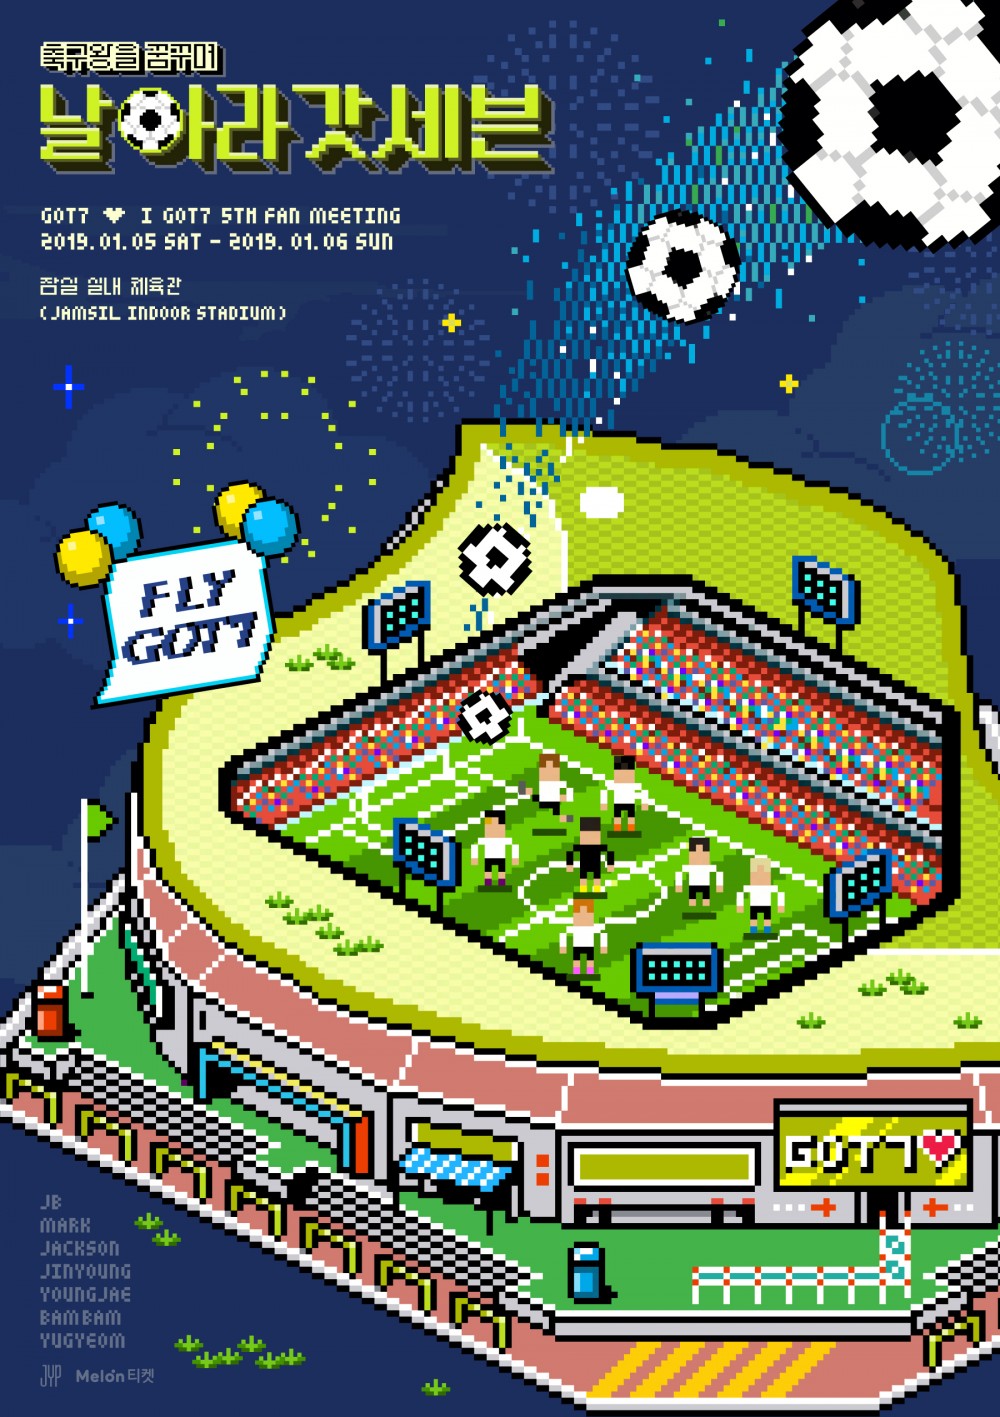 GOT7 анонсировали детали предстоящего фанмитинга "Dreaming of Soccer King: Fly GOT7"